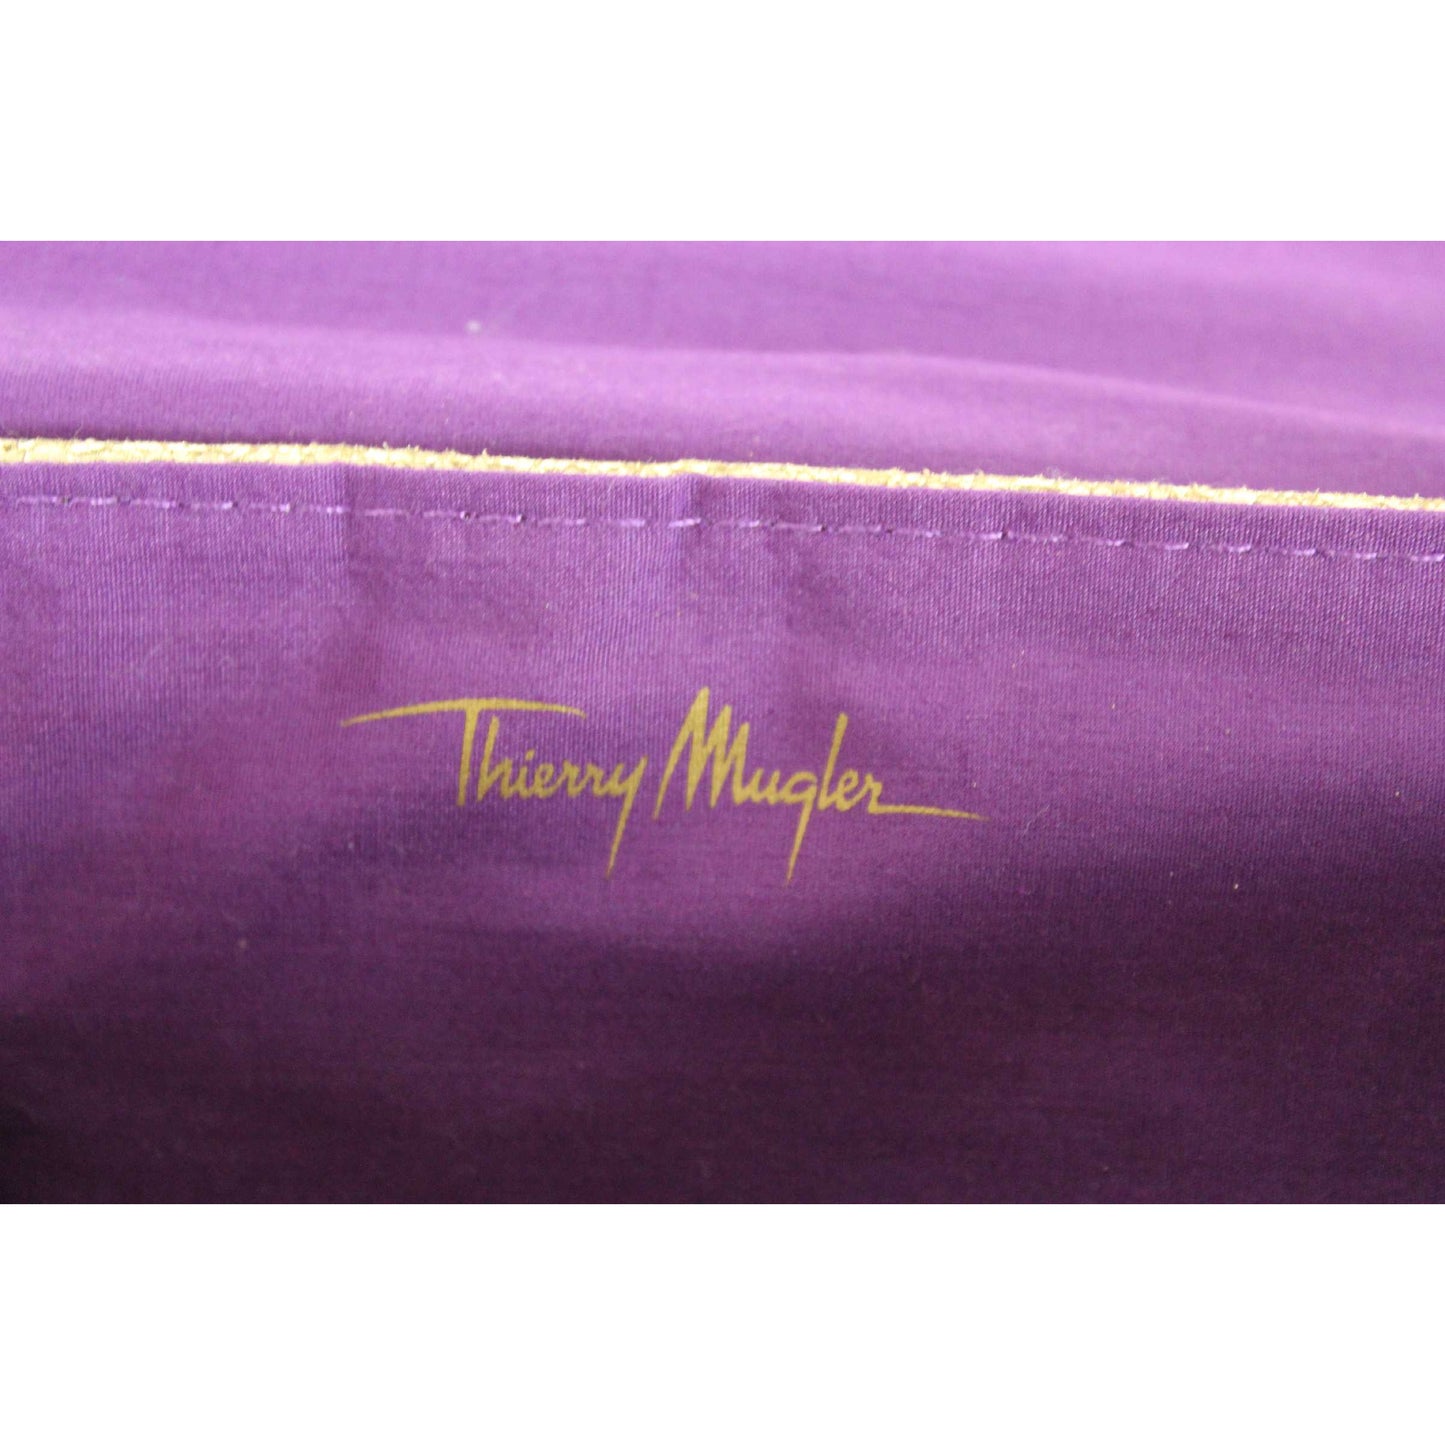 Thierry Mugler Evening Clutch Bag Vintage Gold Handbag